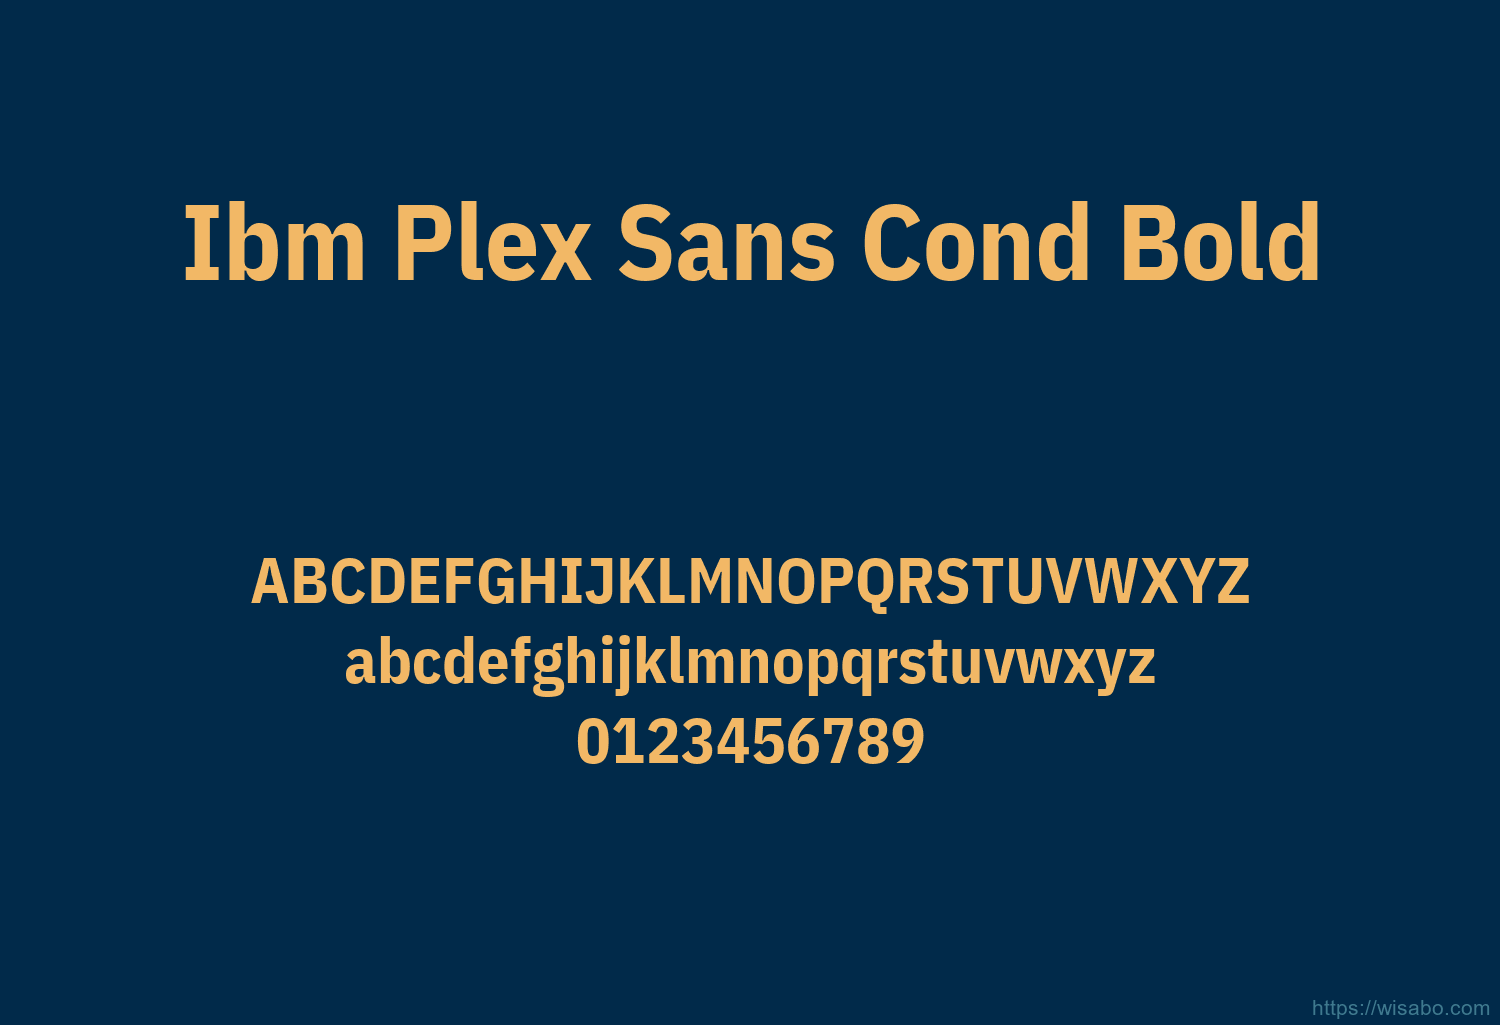 Ibm Plex Sans Cond Bold